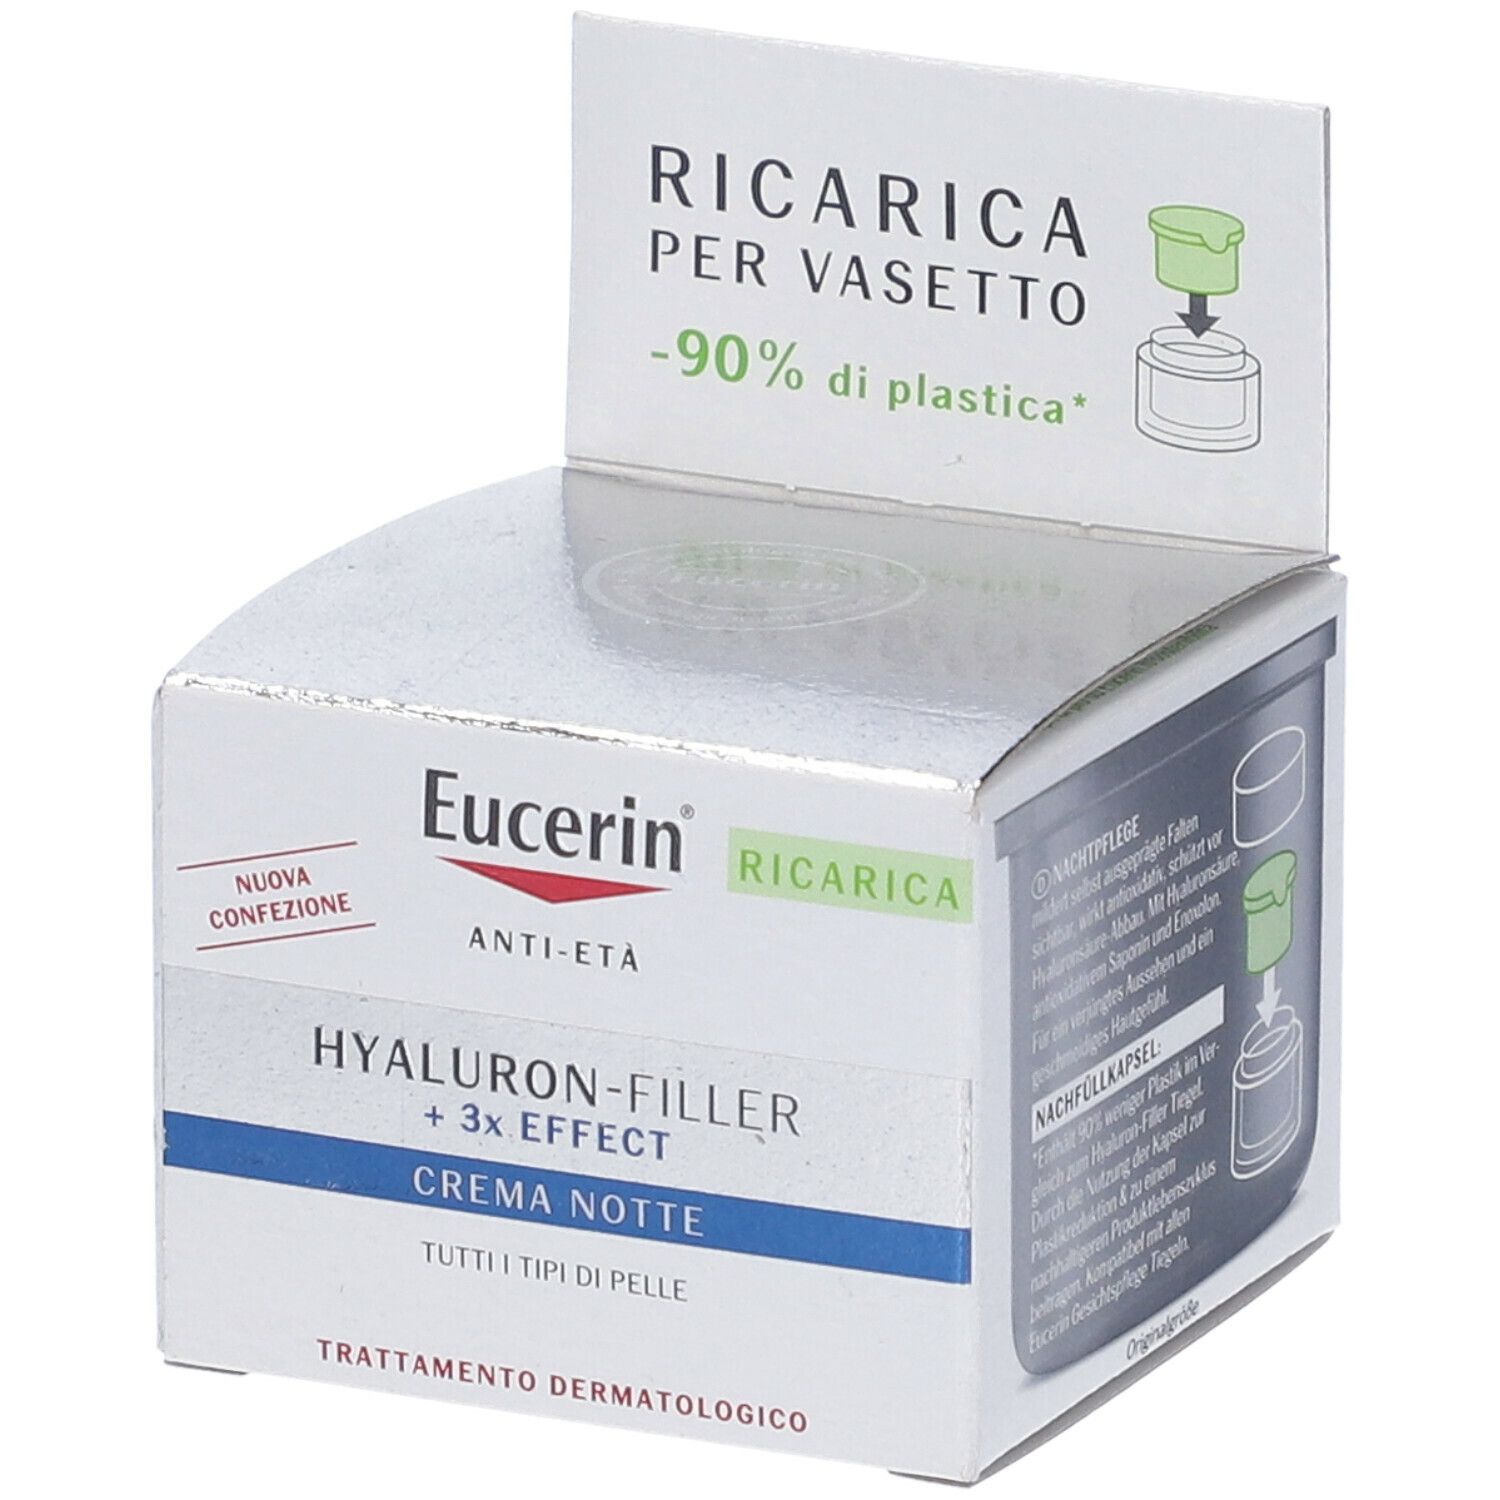 Eucerin® Ricarica Eucerin Hyaluron-Filler +3x Effect Crema Notte